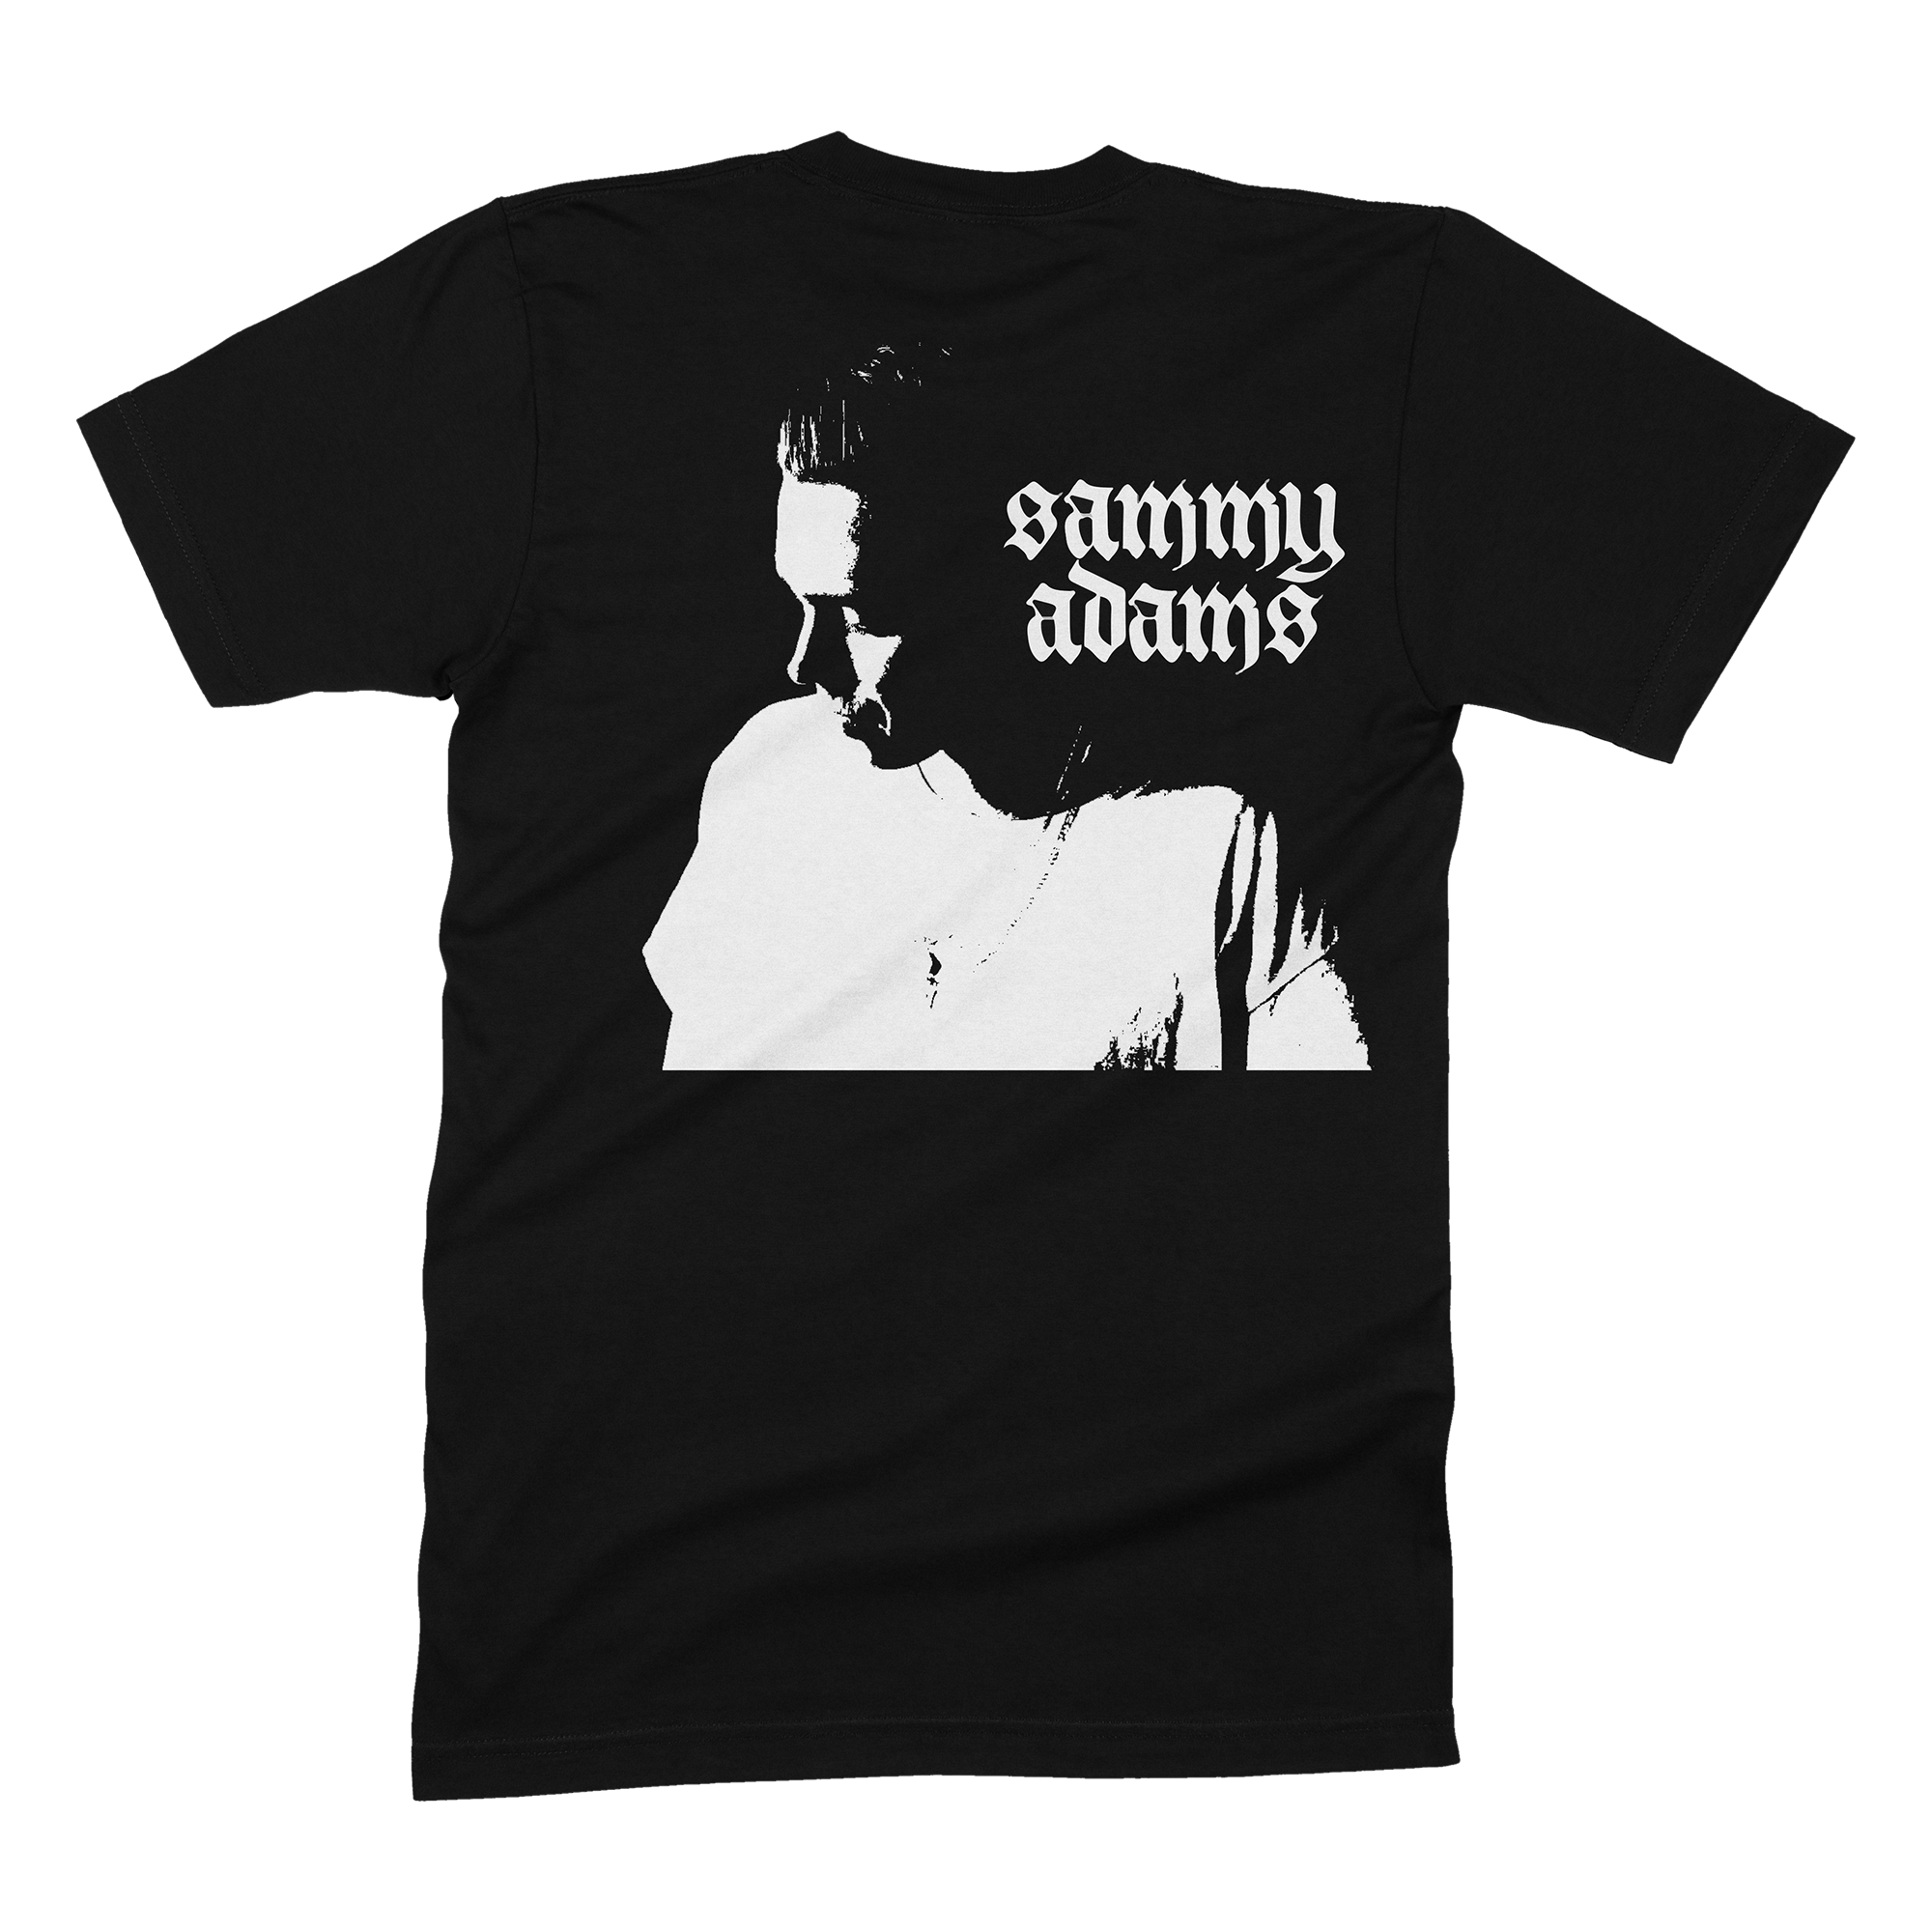 Sammy Adams - Logo Pocket Shirt